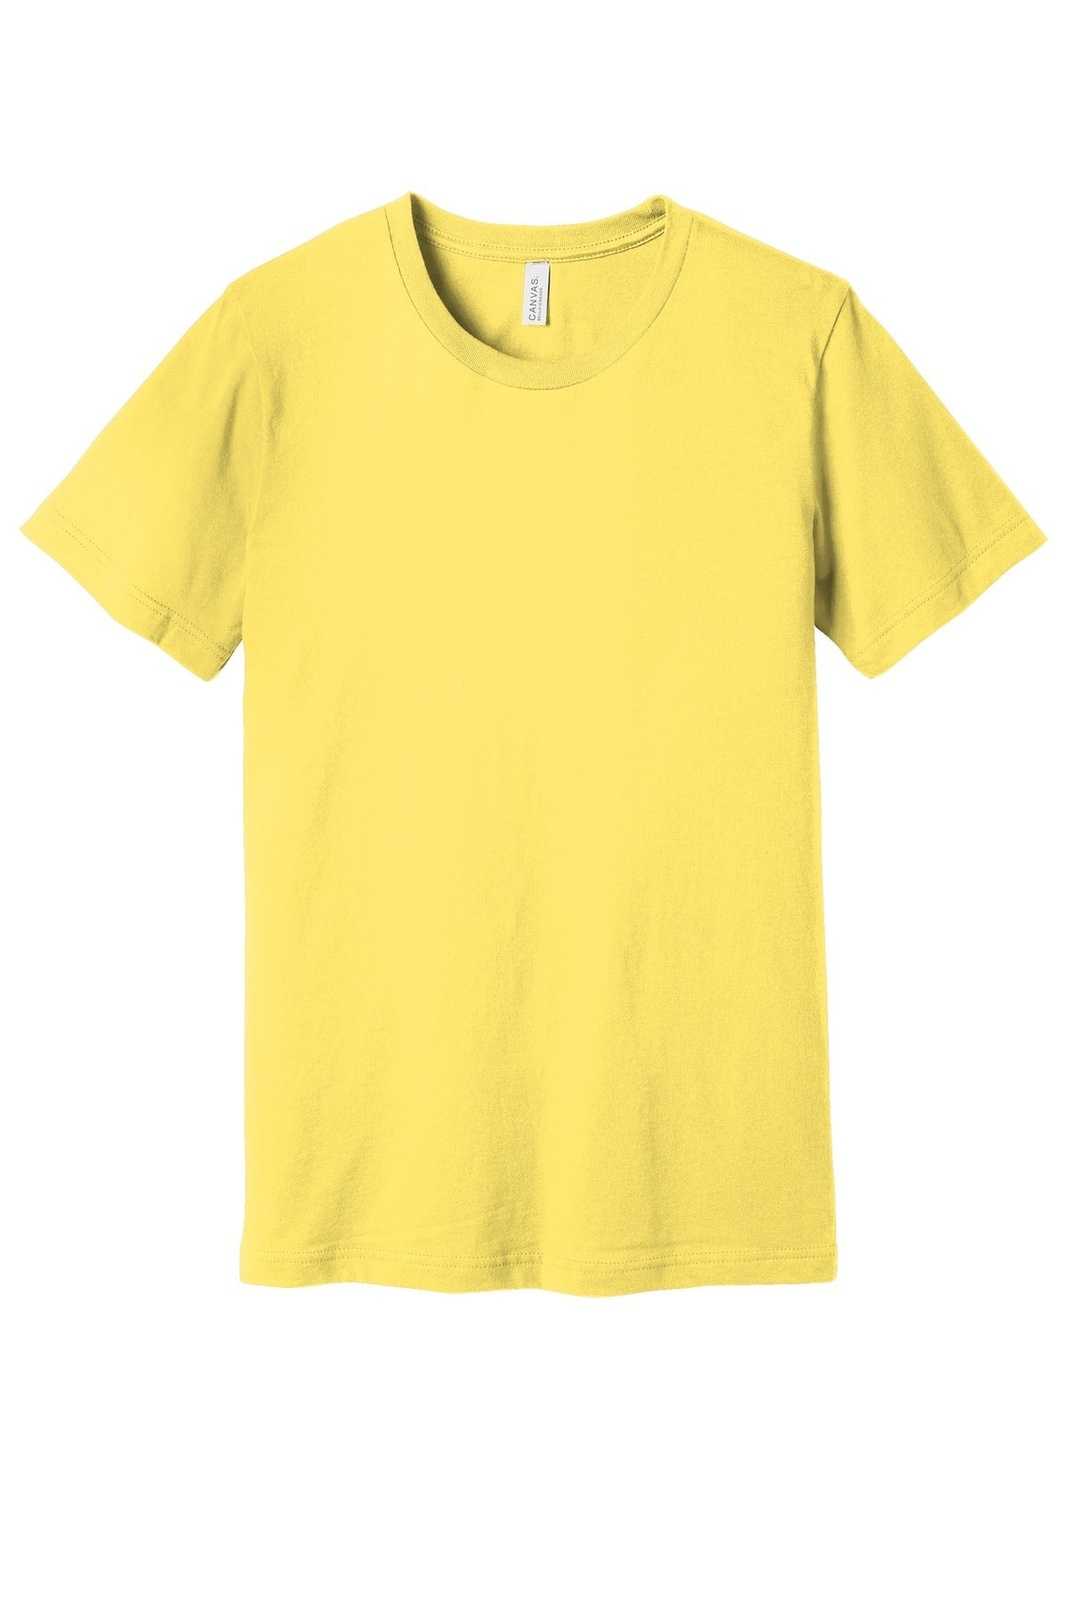 Bella + Canvas 3001 Unisex Jersey Short Sleeve Tee - Yellow - HIT a Double